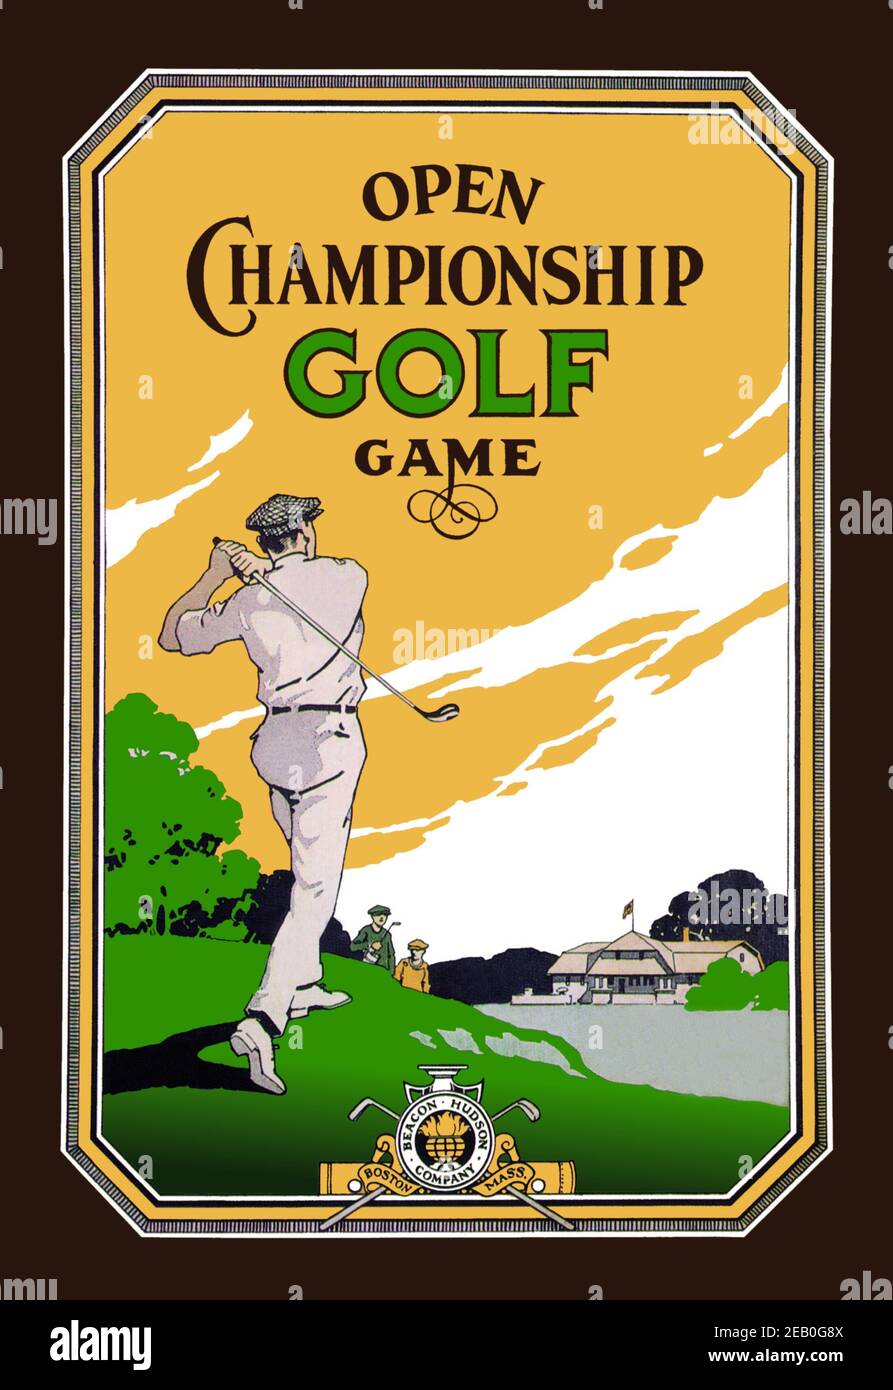 Open Championship Golf Game Stock Photo